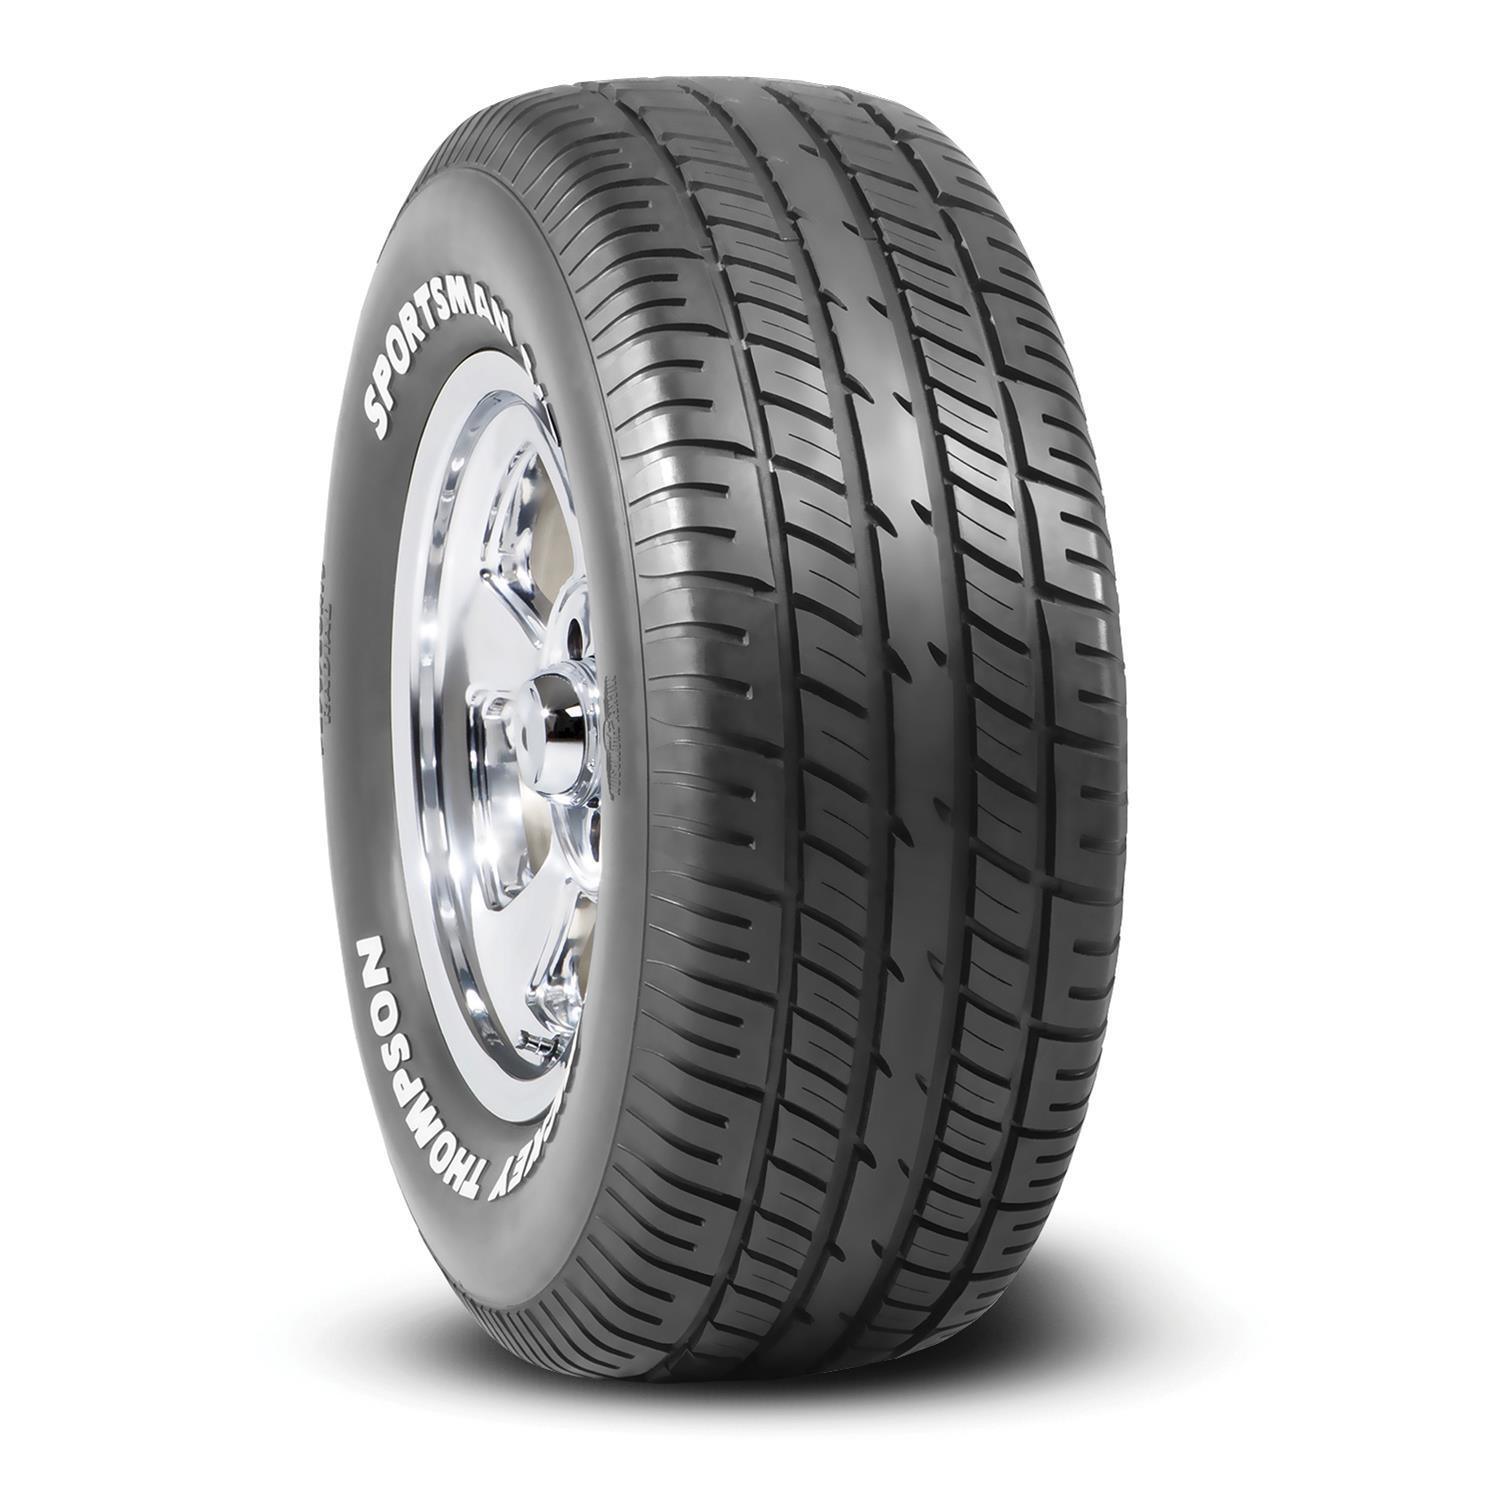 P245/60R15 Sportsman S/T Tire - Burlile Performance Products